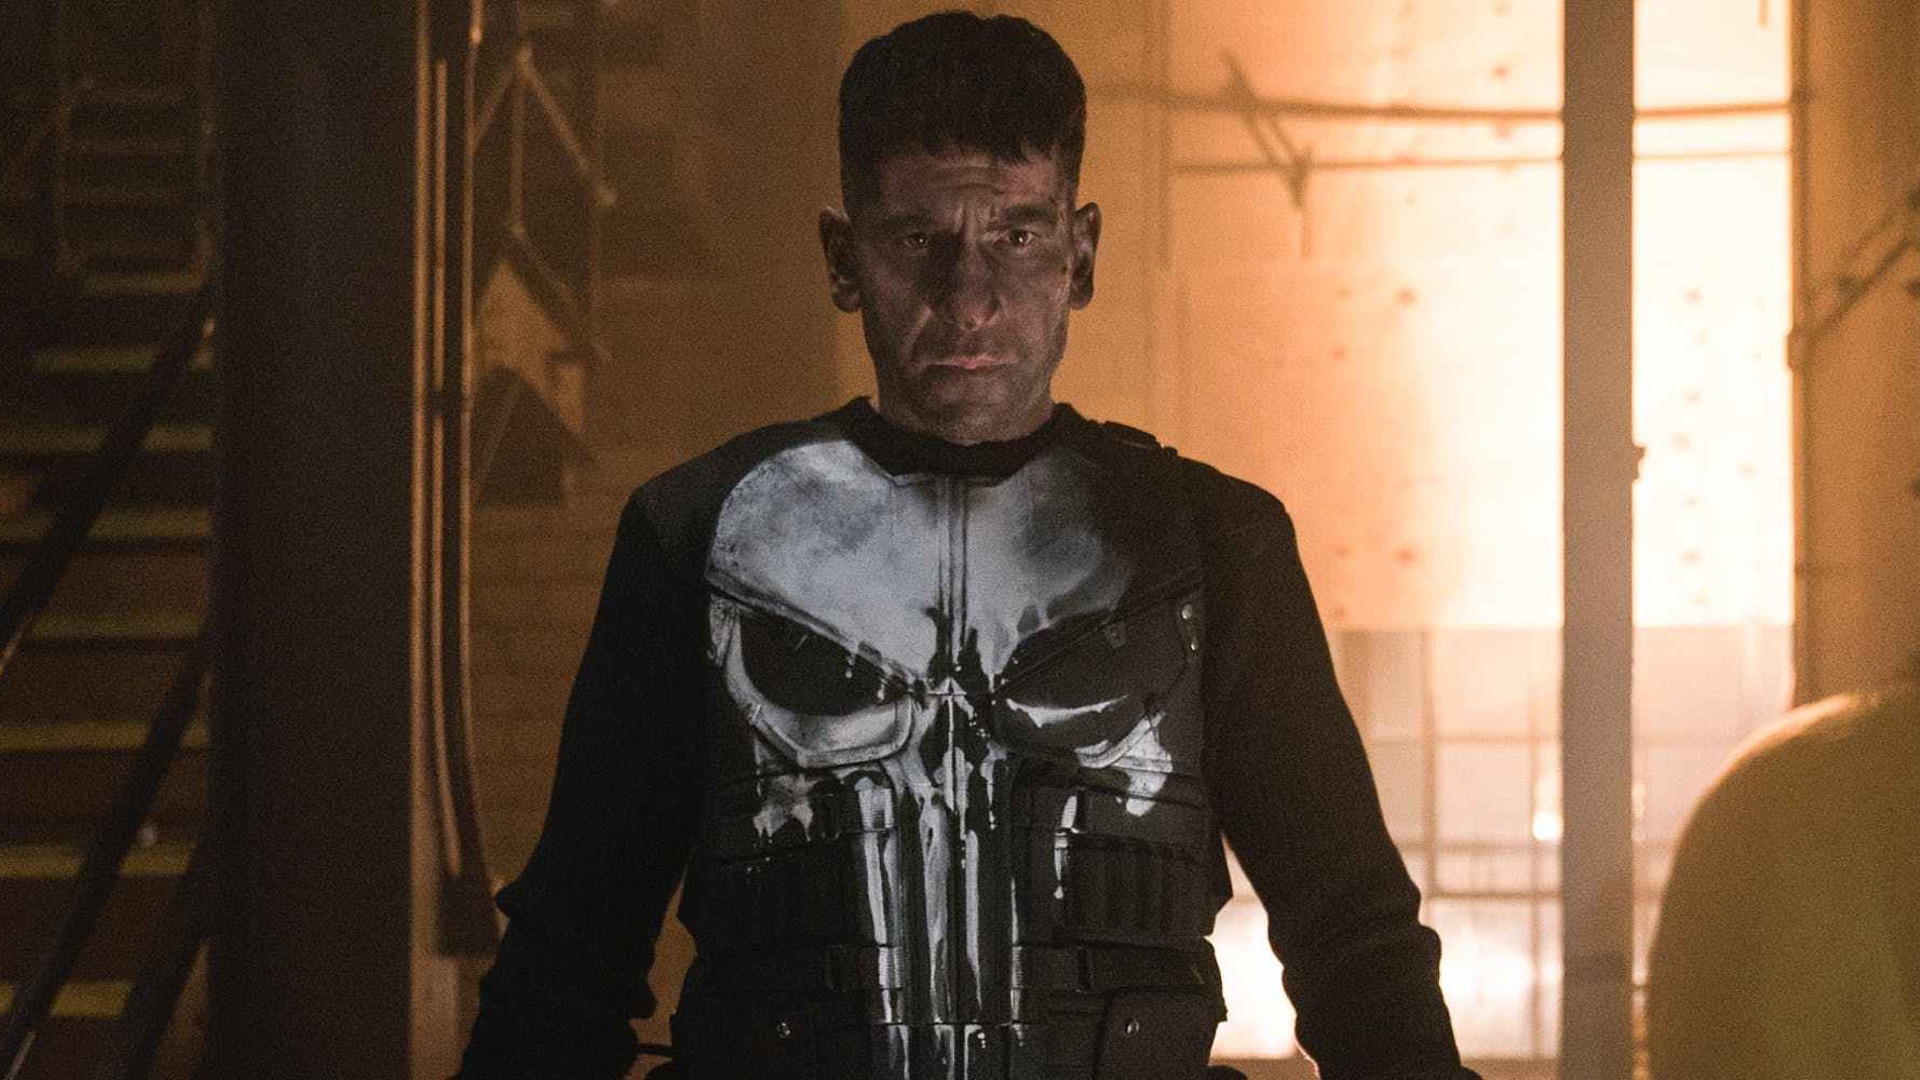 The Punisher's season 2 foe is an alt-right Christian fundamentalist